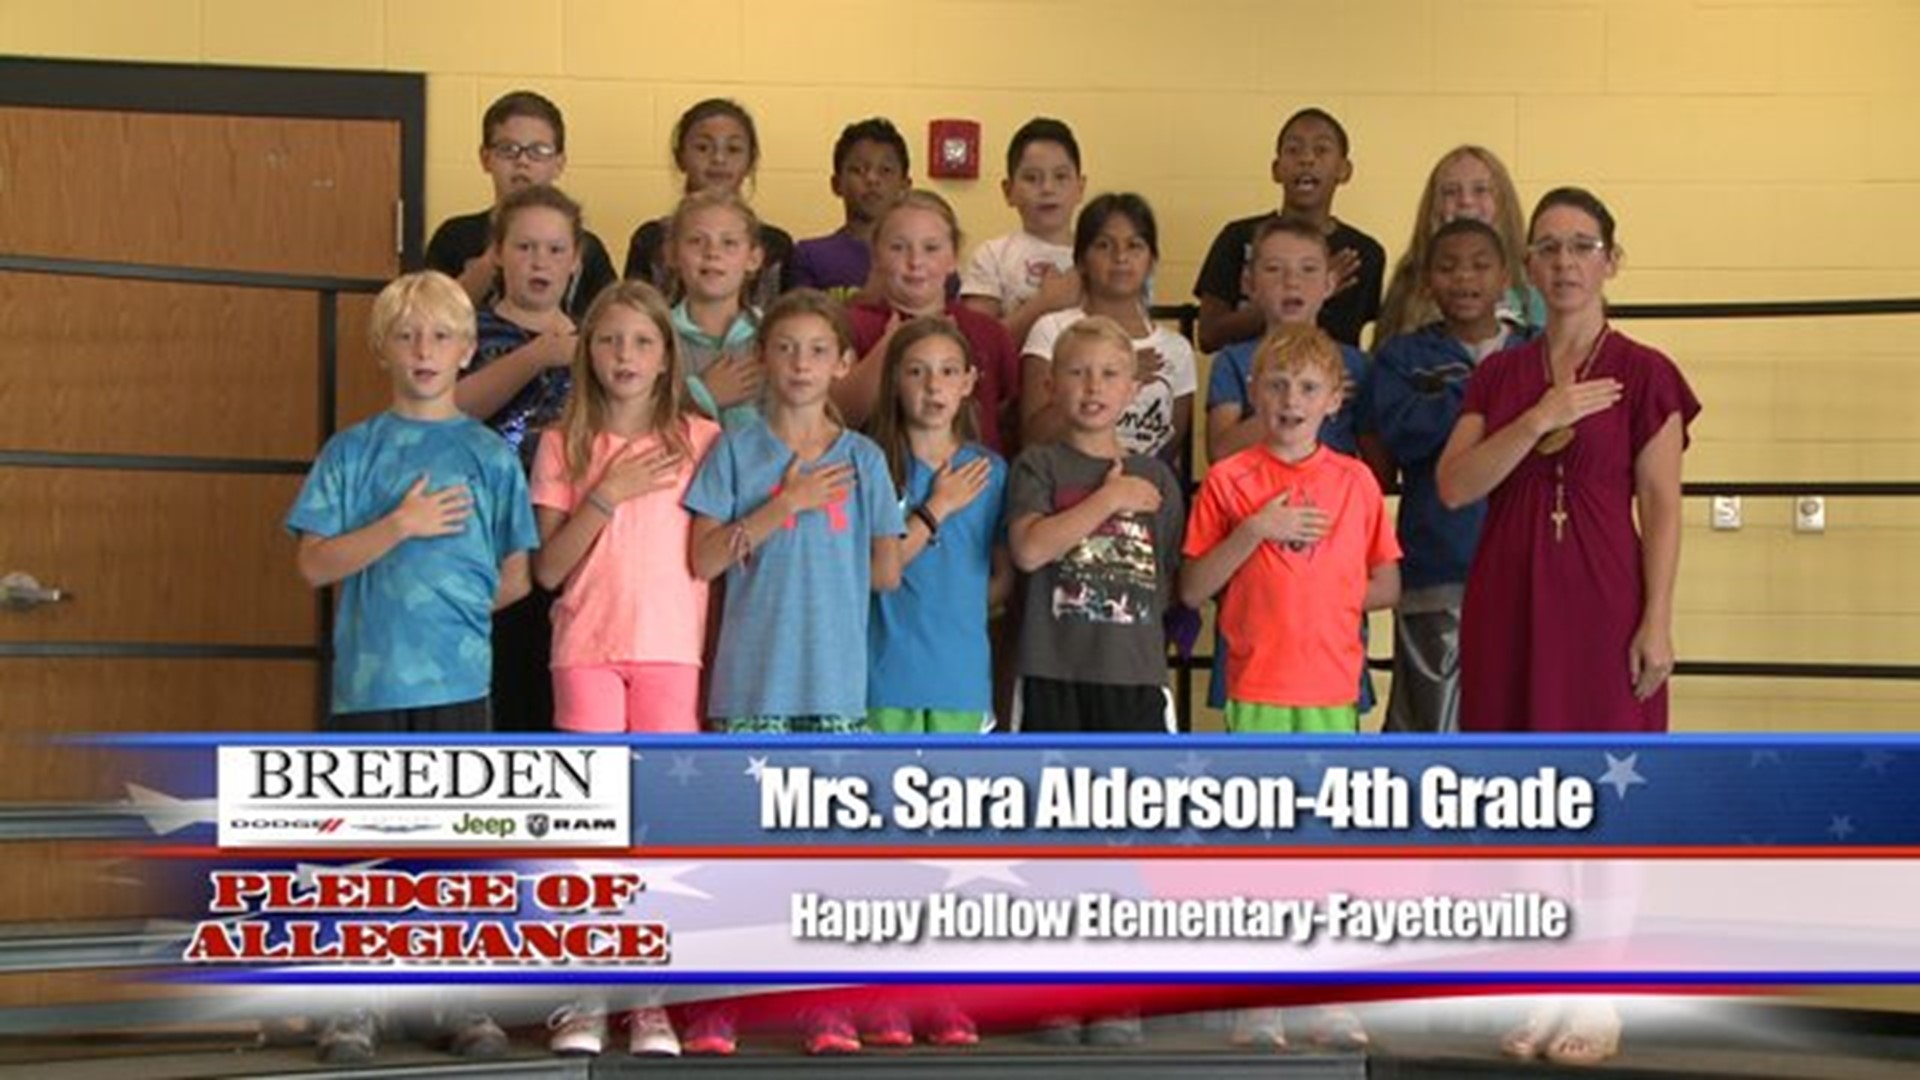 Happy Hollow Elementary, Fayetteville - Mrs. Sara Alderson - 4th Grade